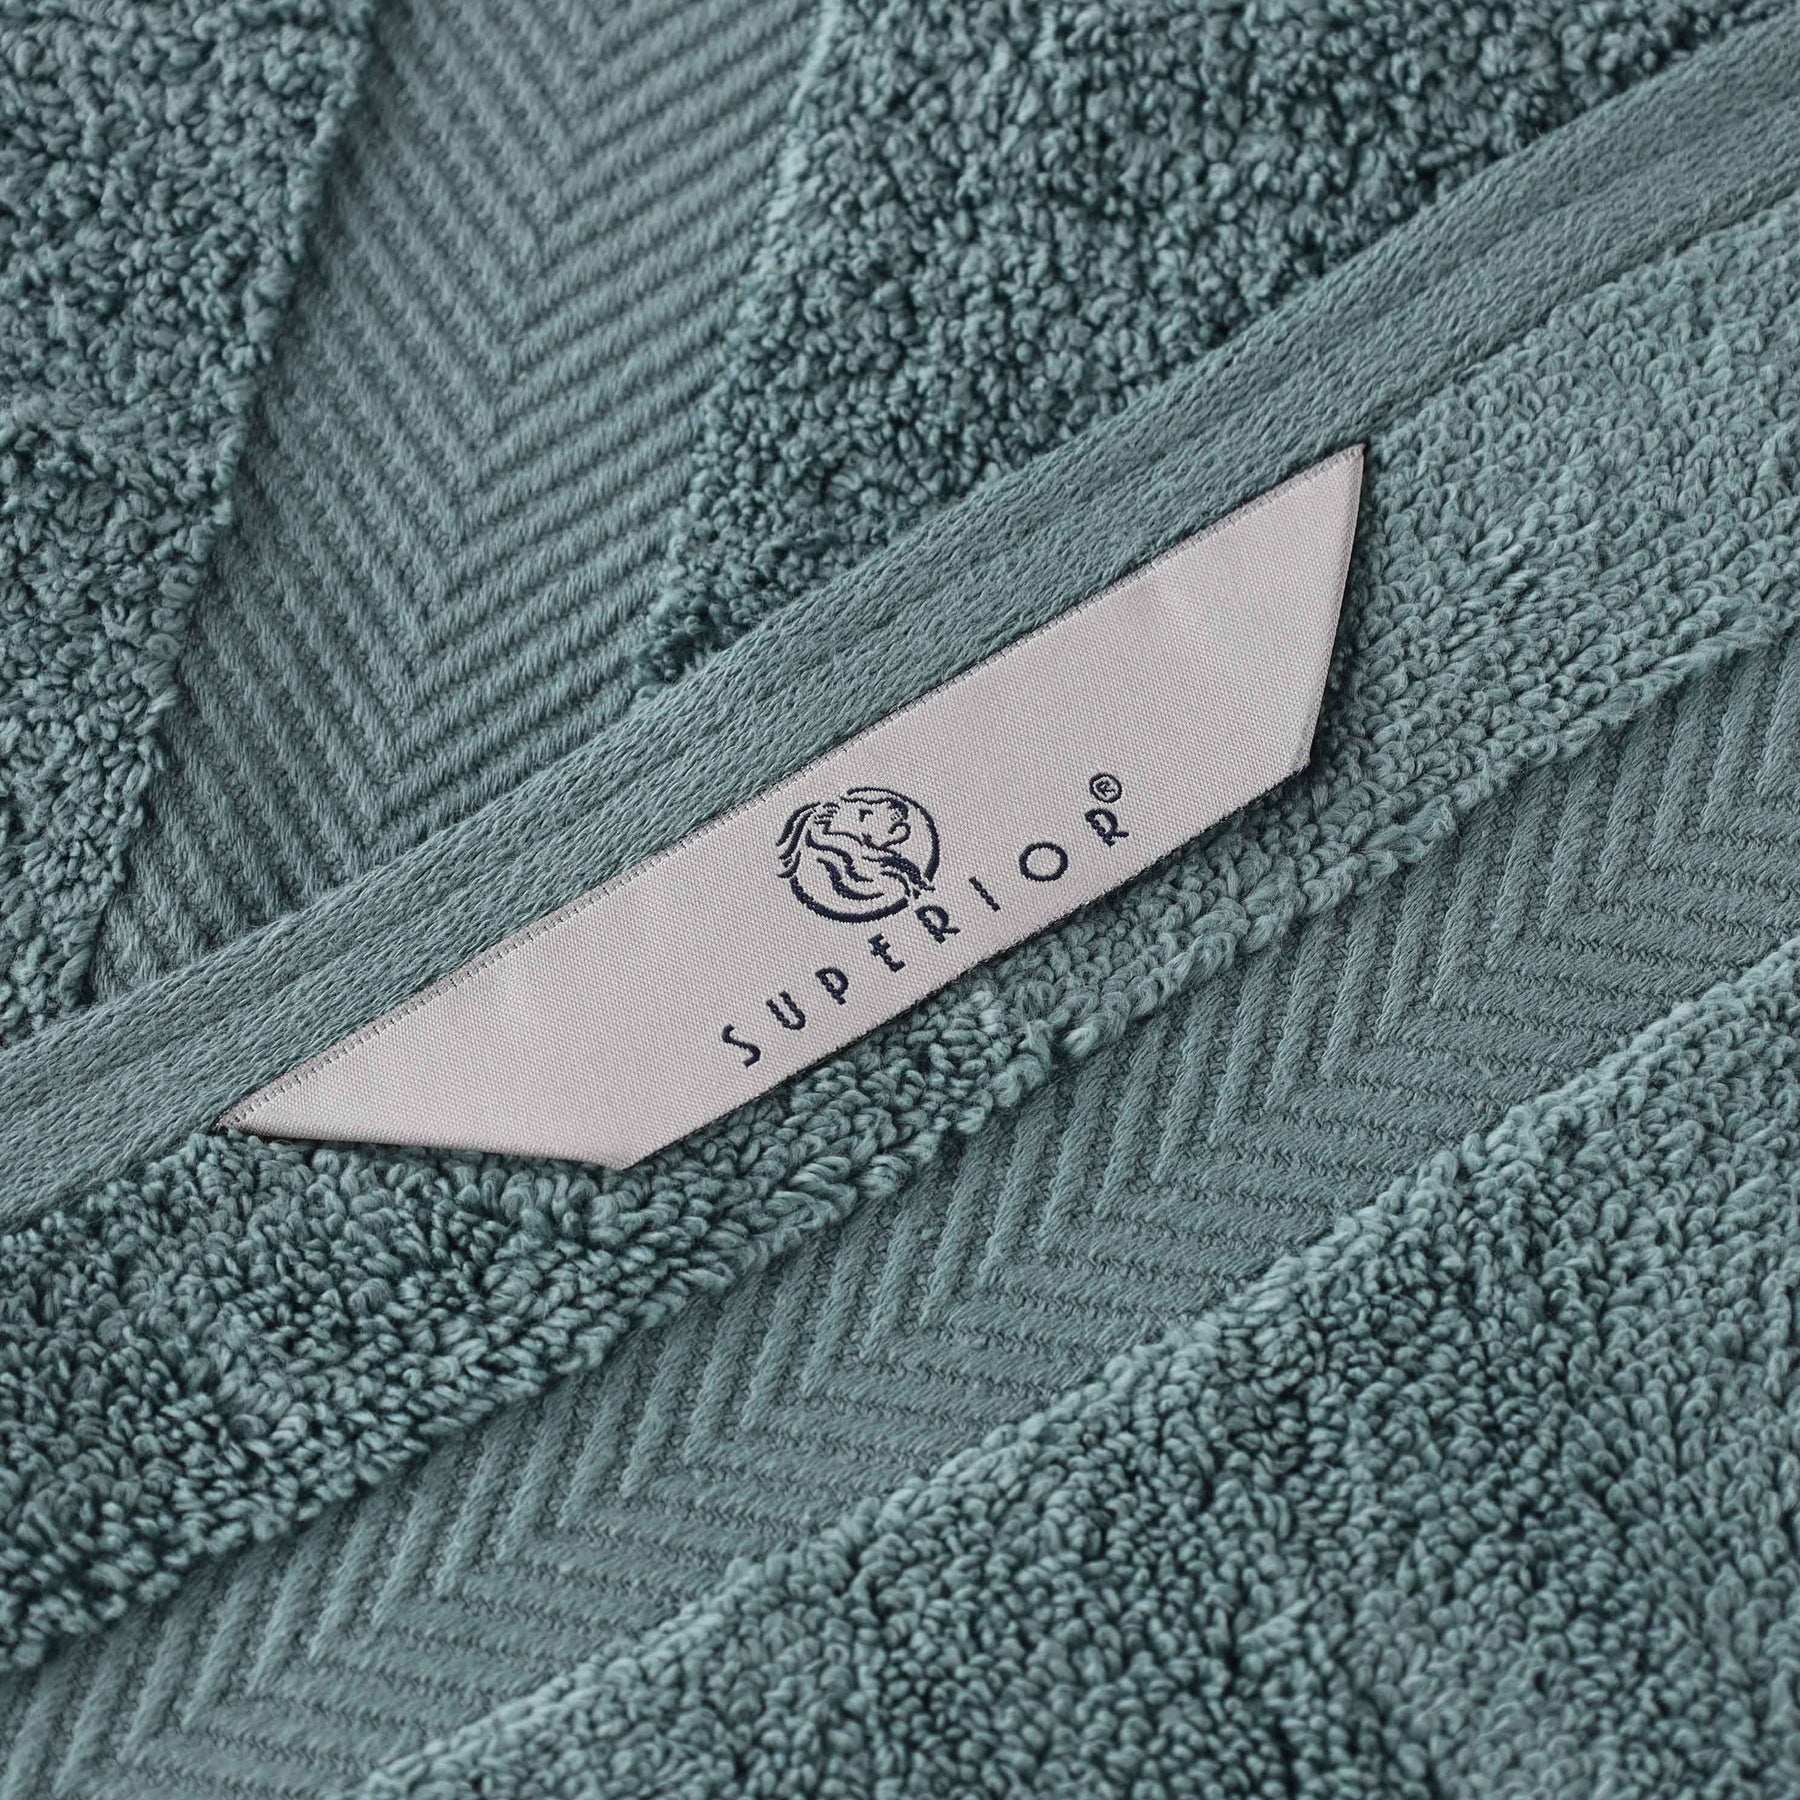 Zero-Twist Smart-Dry Combed Cotton 3 Piece Towel Set - Jade